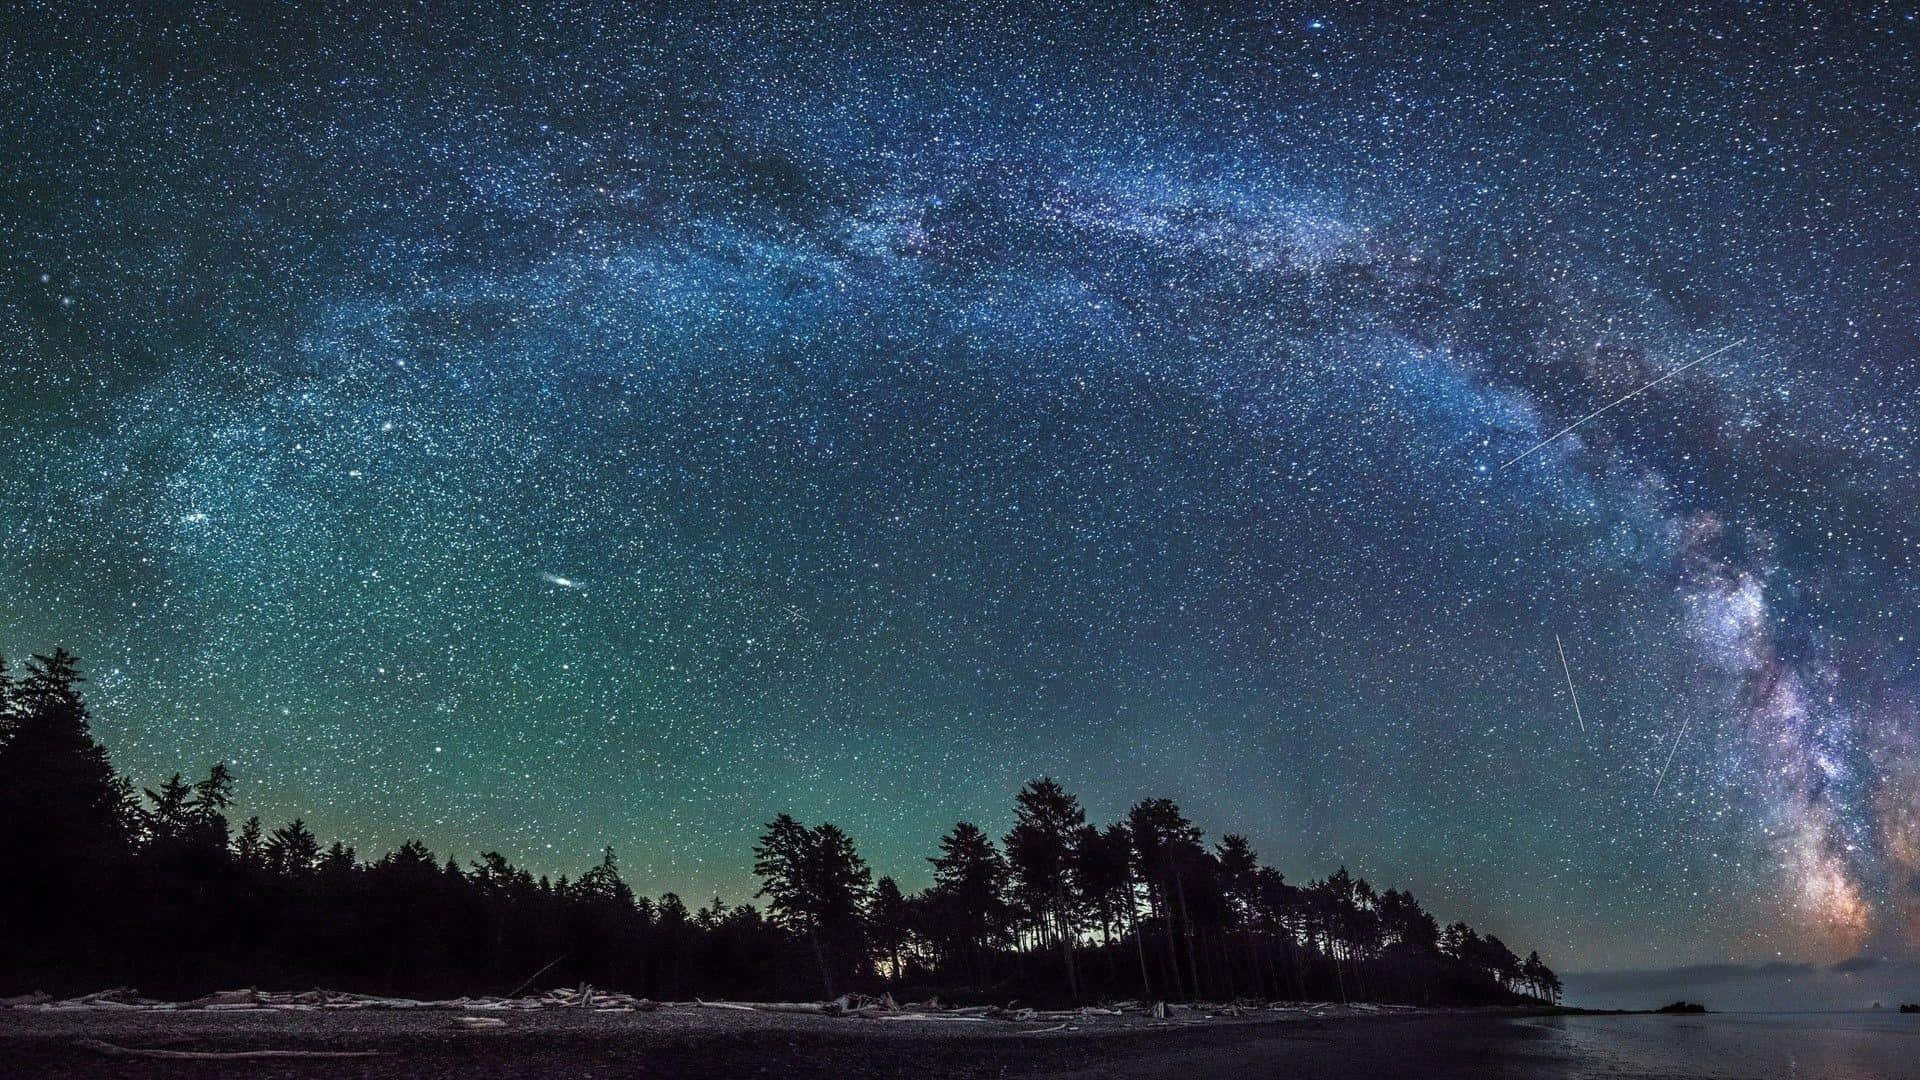 "Awe-inspiring beauty of the Milky Way"